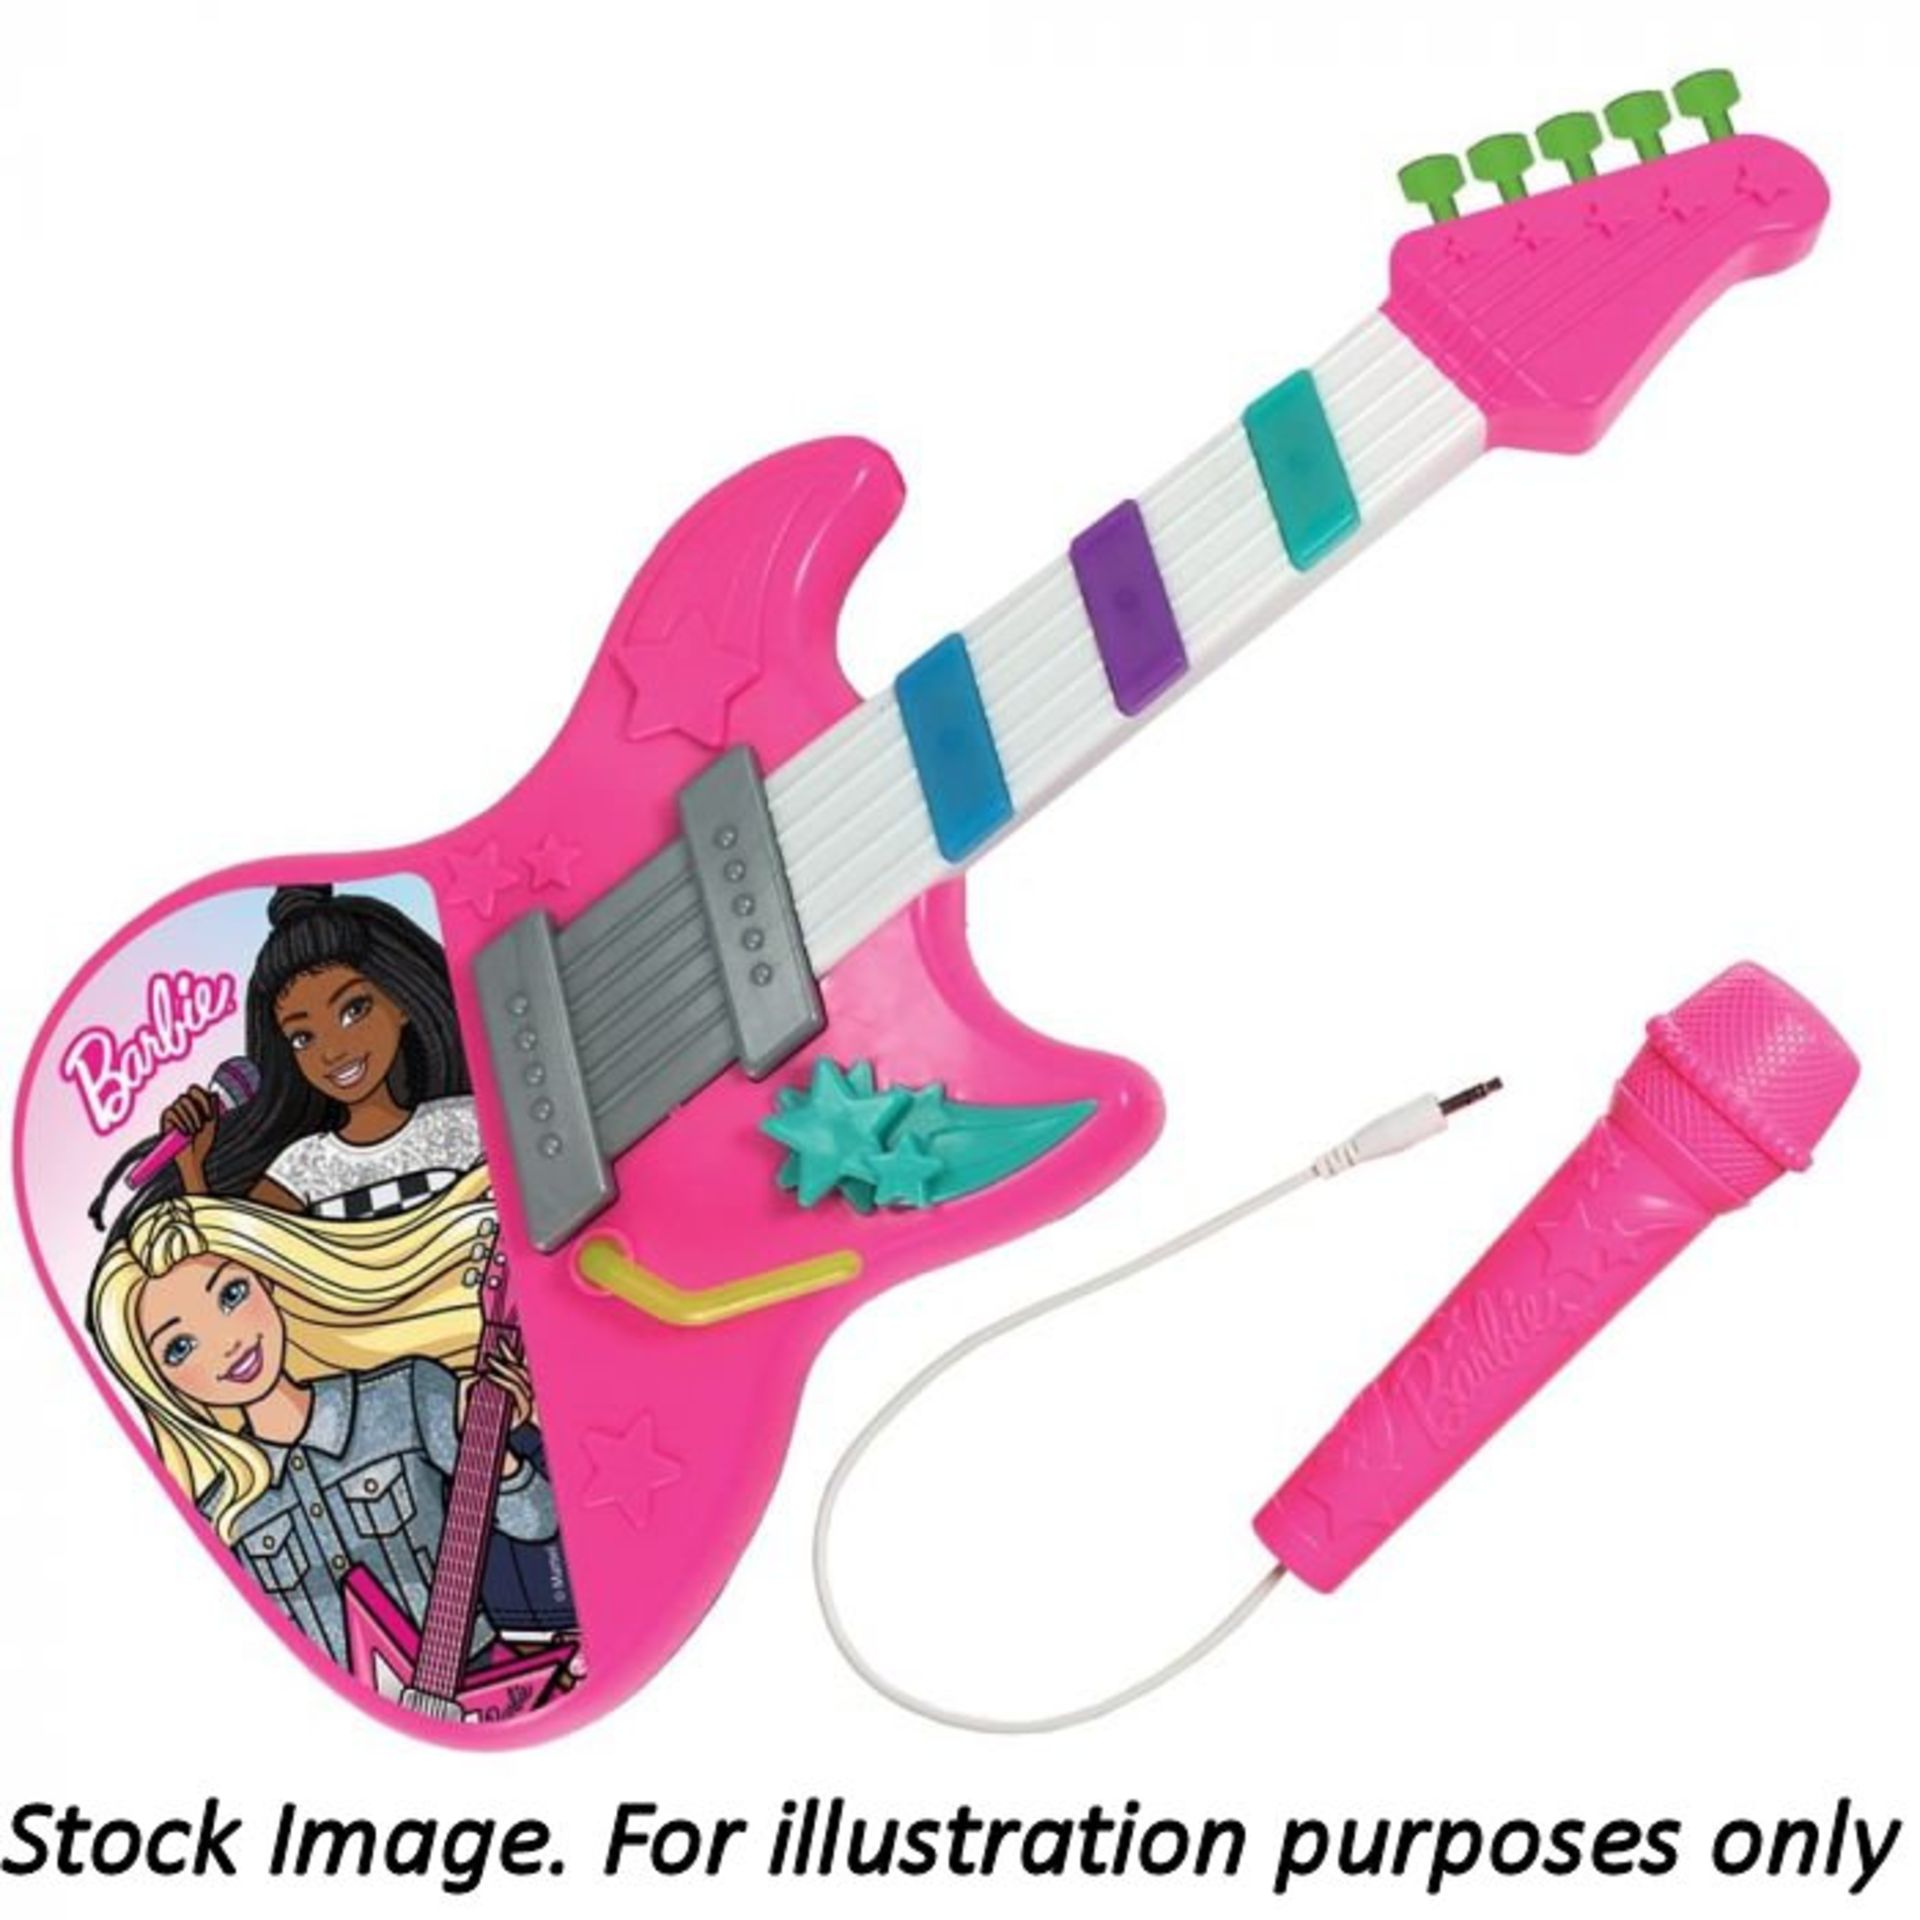 1 x Barbie Rock Star Guitar - New/Boxed - HTYS306 - CL987 - Location: Altrincham WA14 - RRP: £